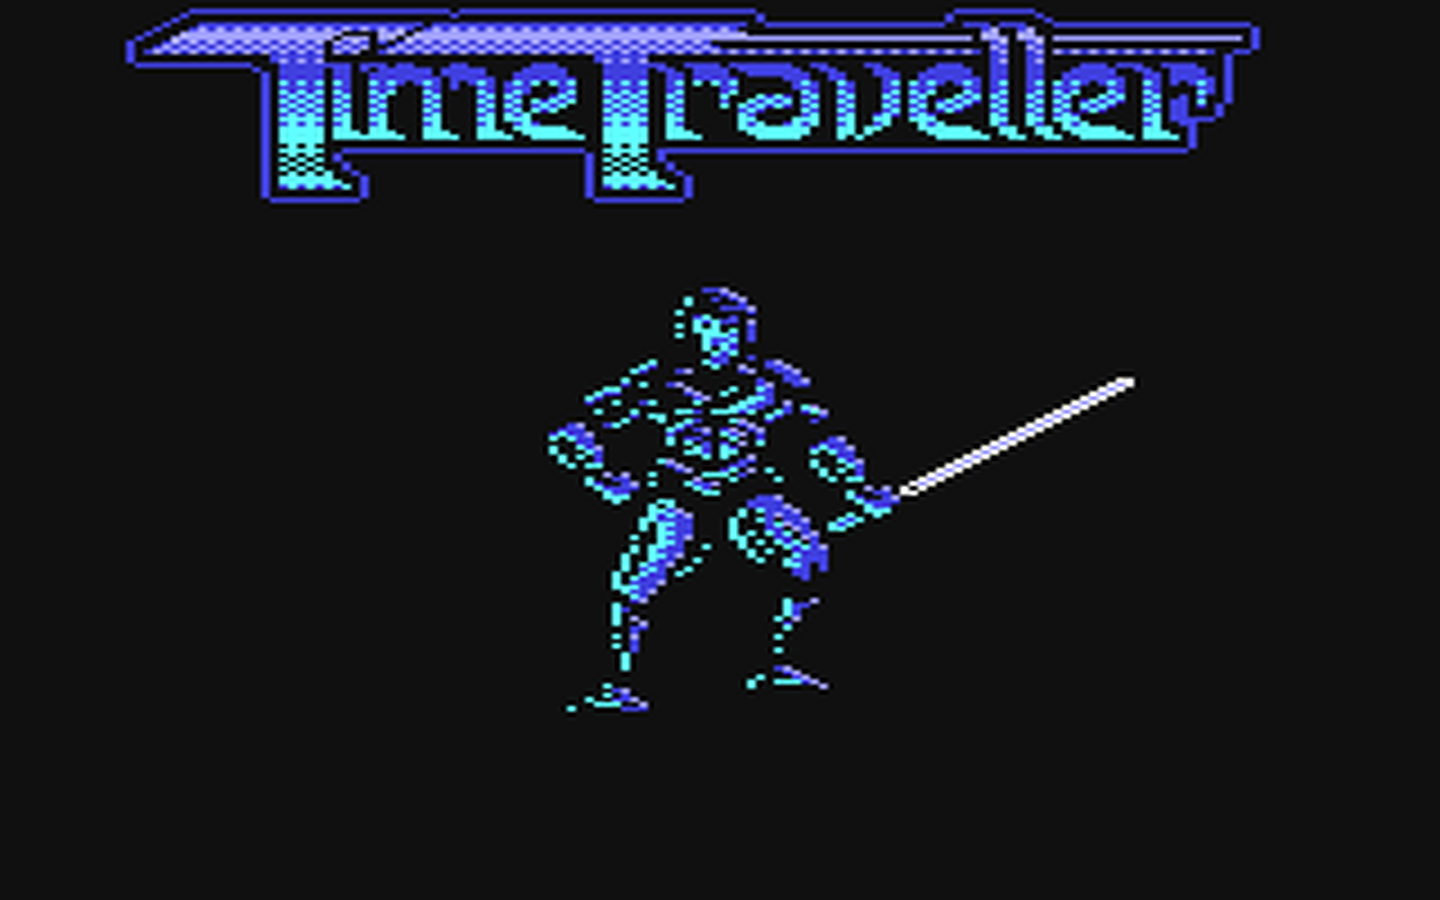 C64 GameBase Time_Traveller Marex 1995